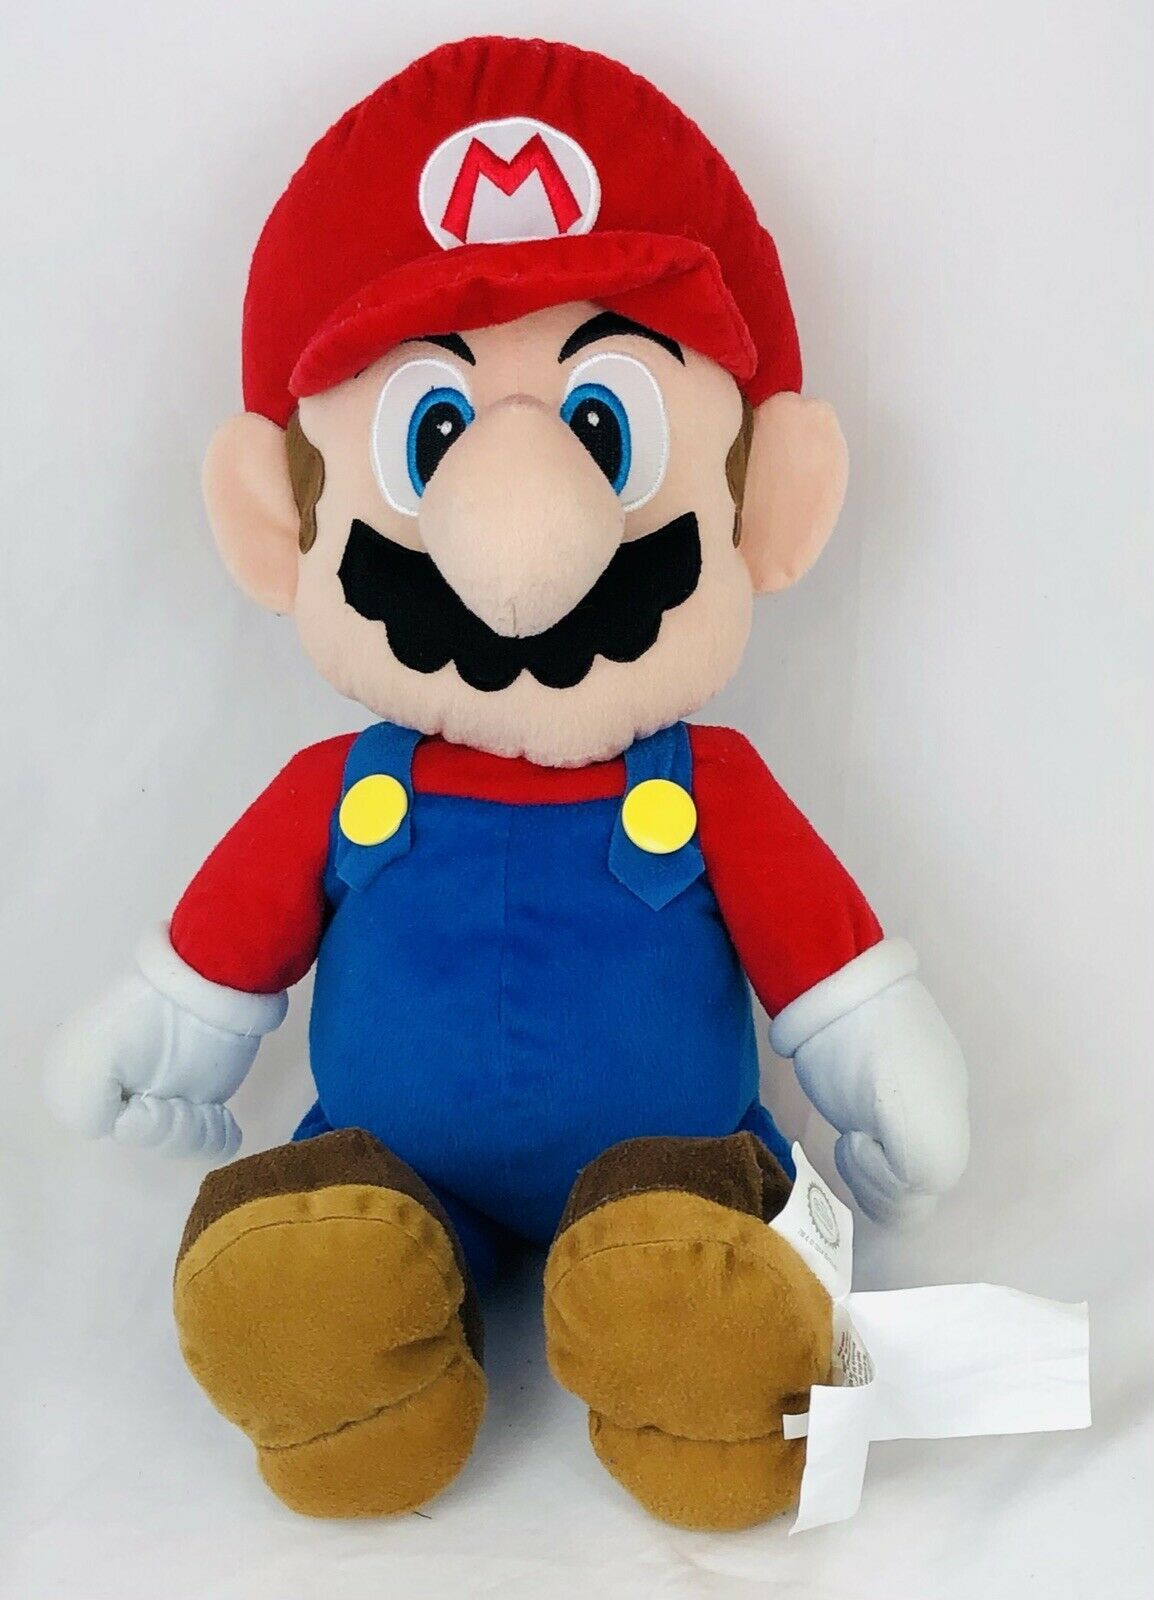 Super Mario Plush Nintendo 23 inches official Nintendo licensed Product(2015 YR) - $21.84